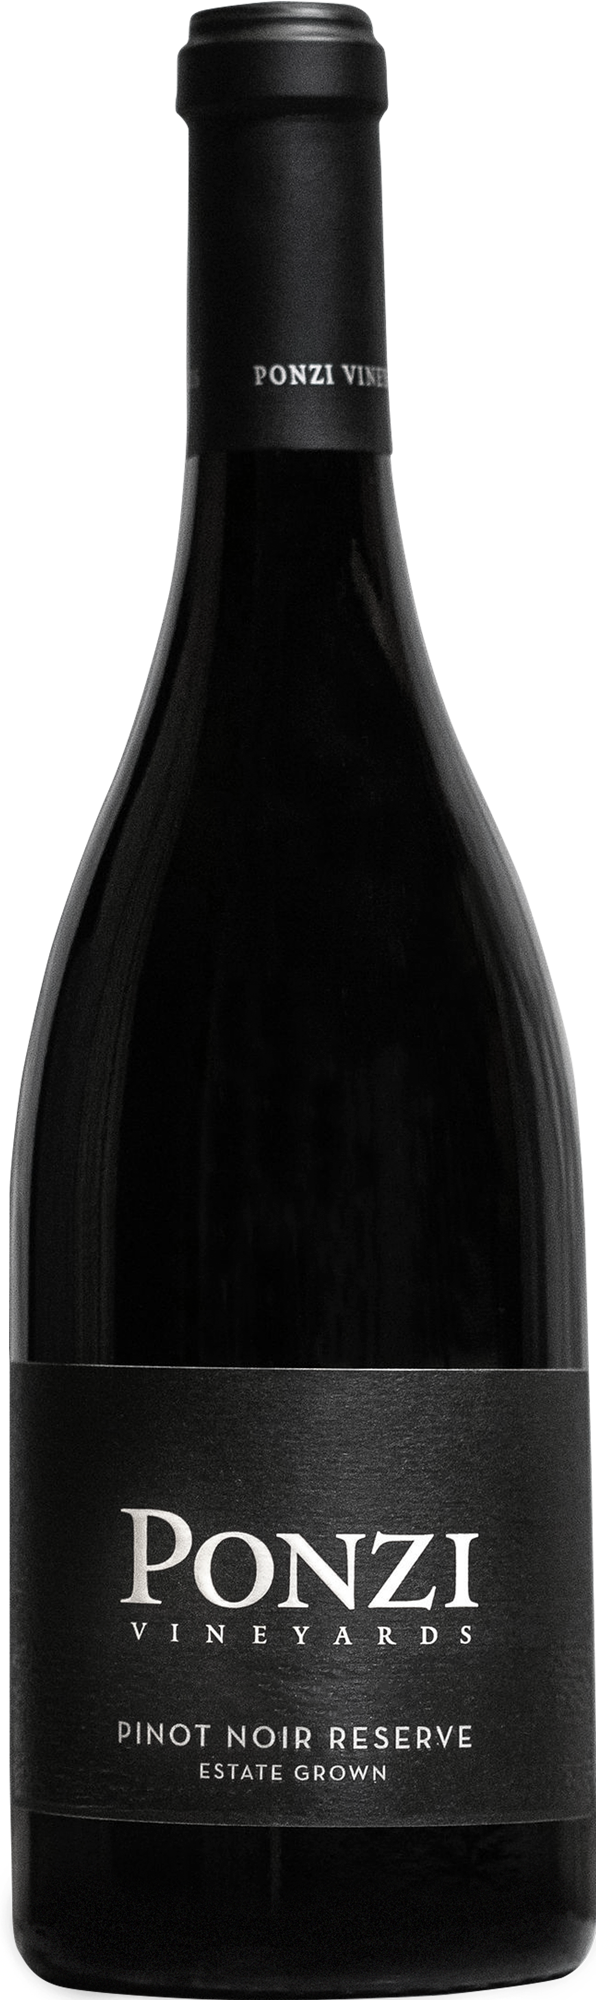 2017 Ponzi Pinot Noir Reserve Willamette Valley